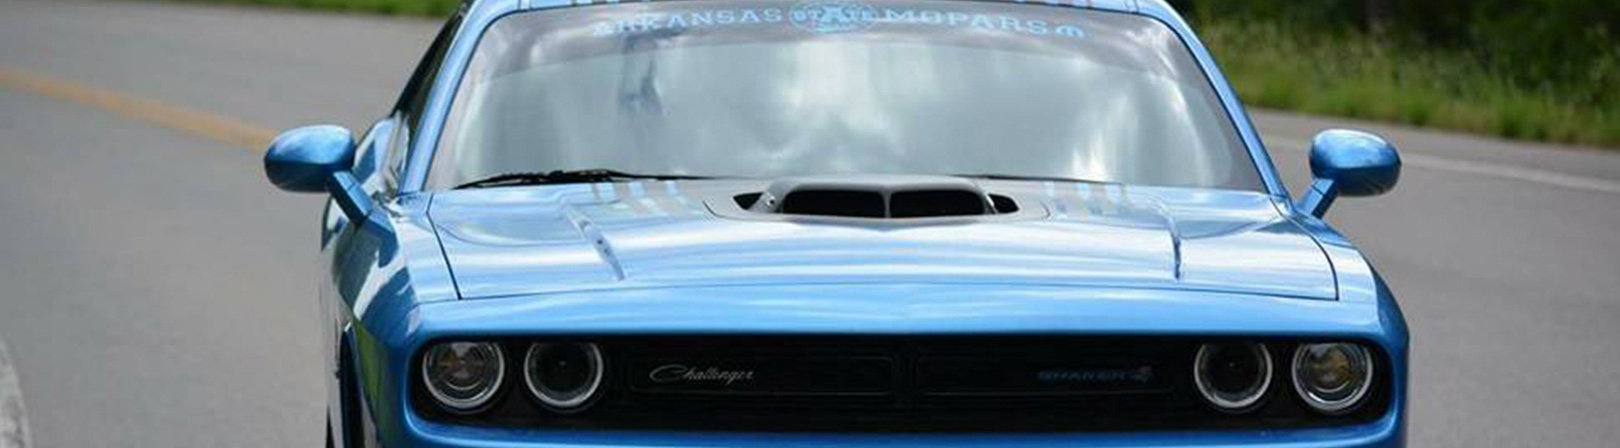 MoparMania 6 Car Show